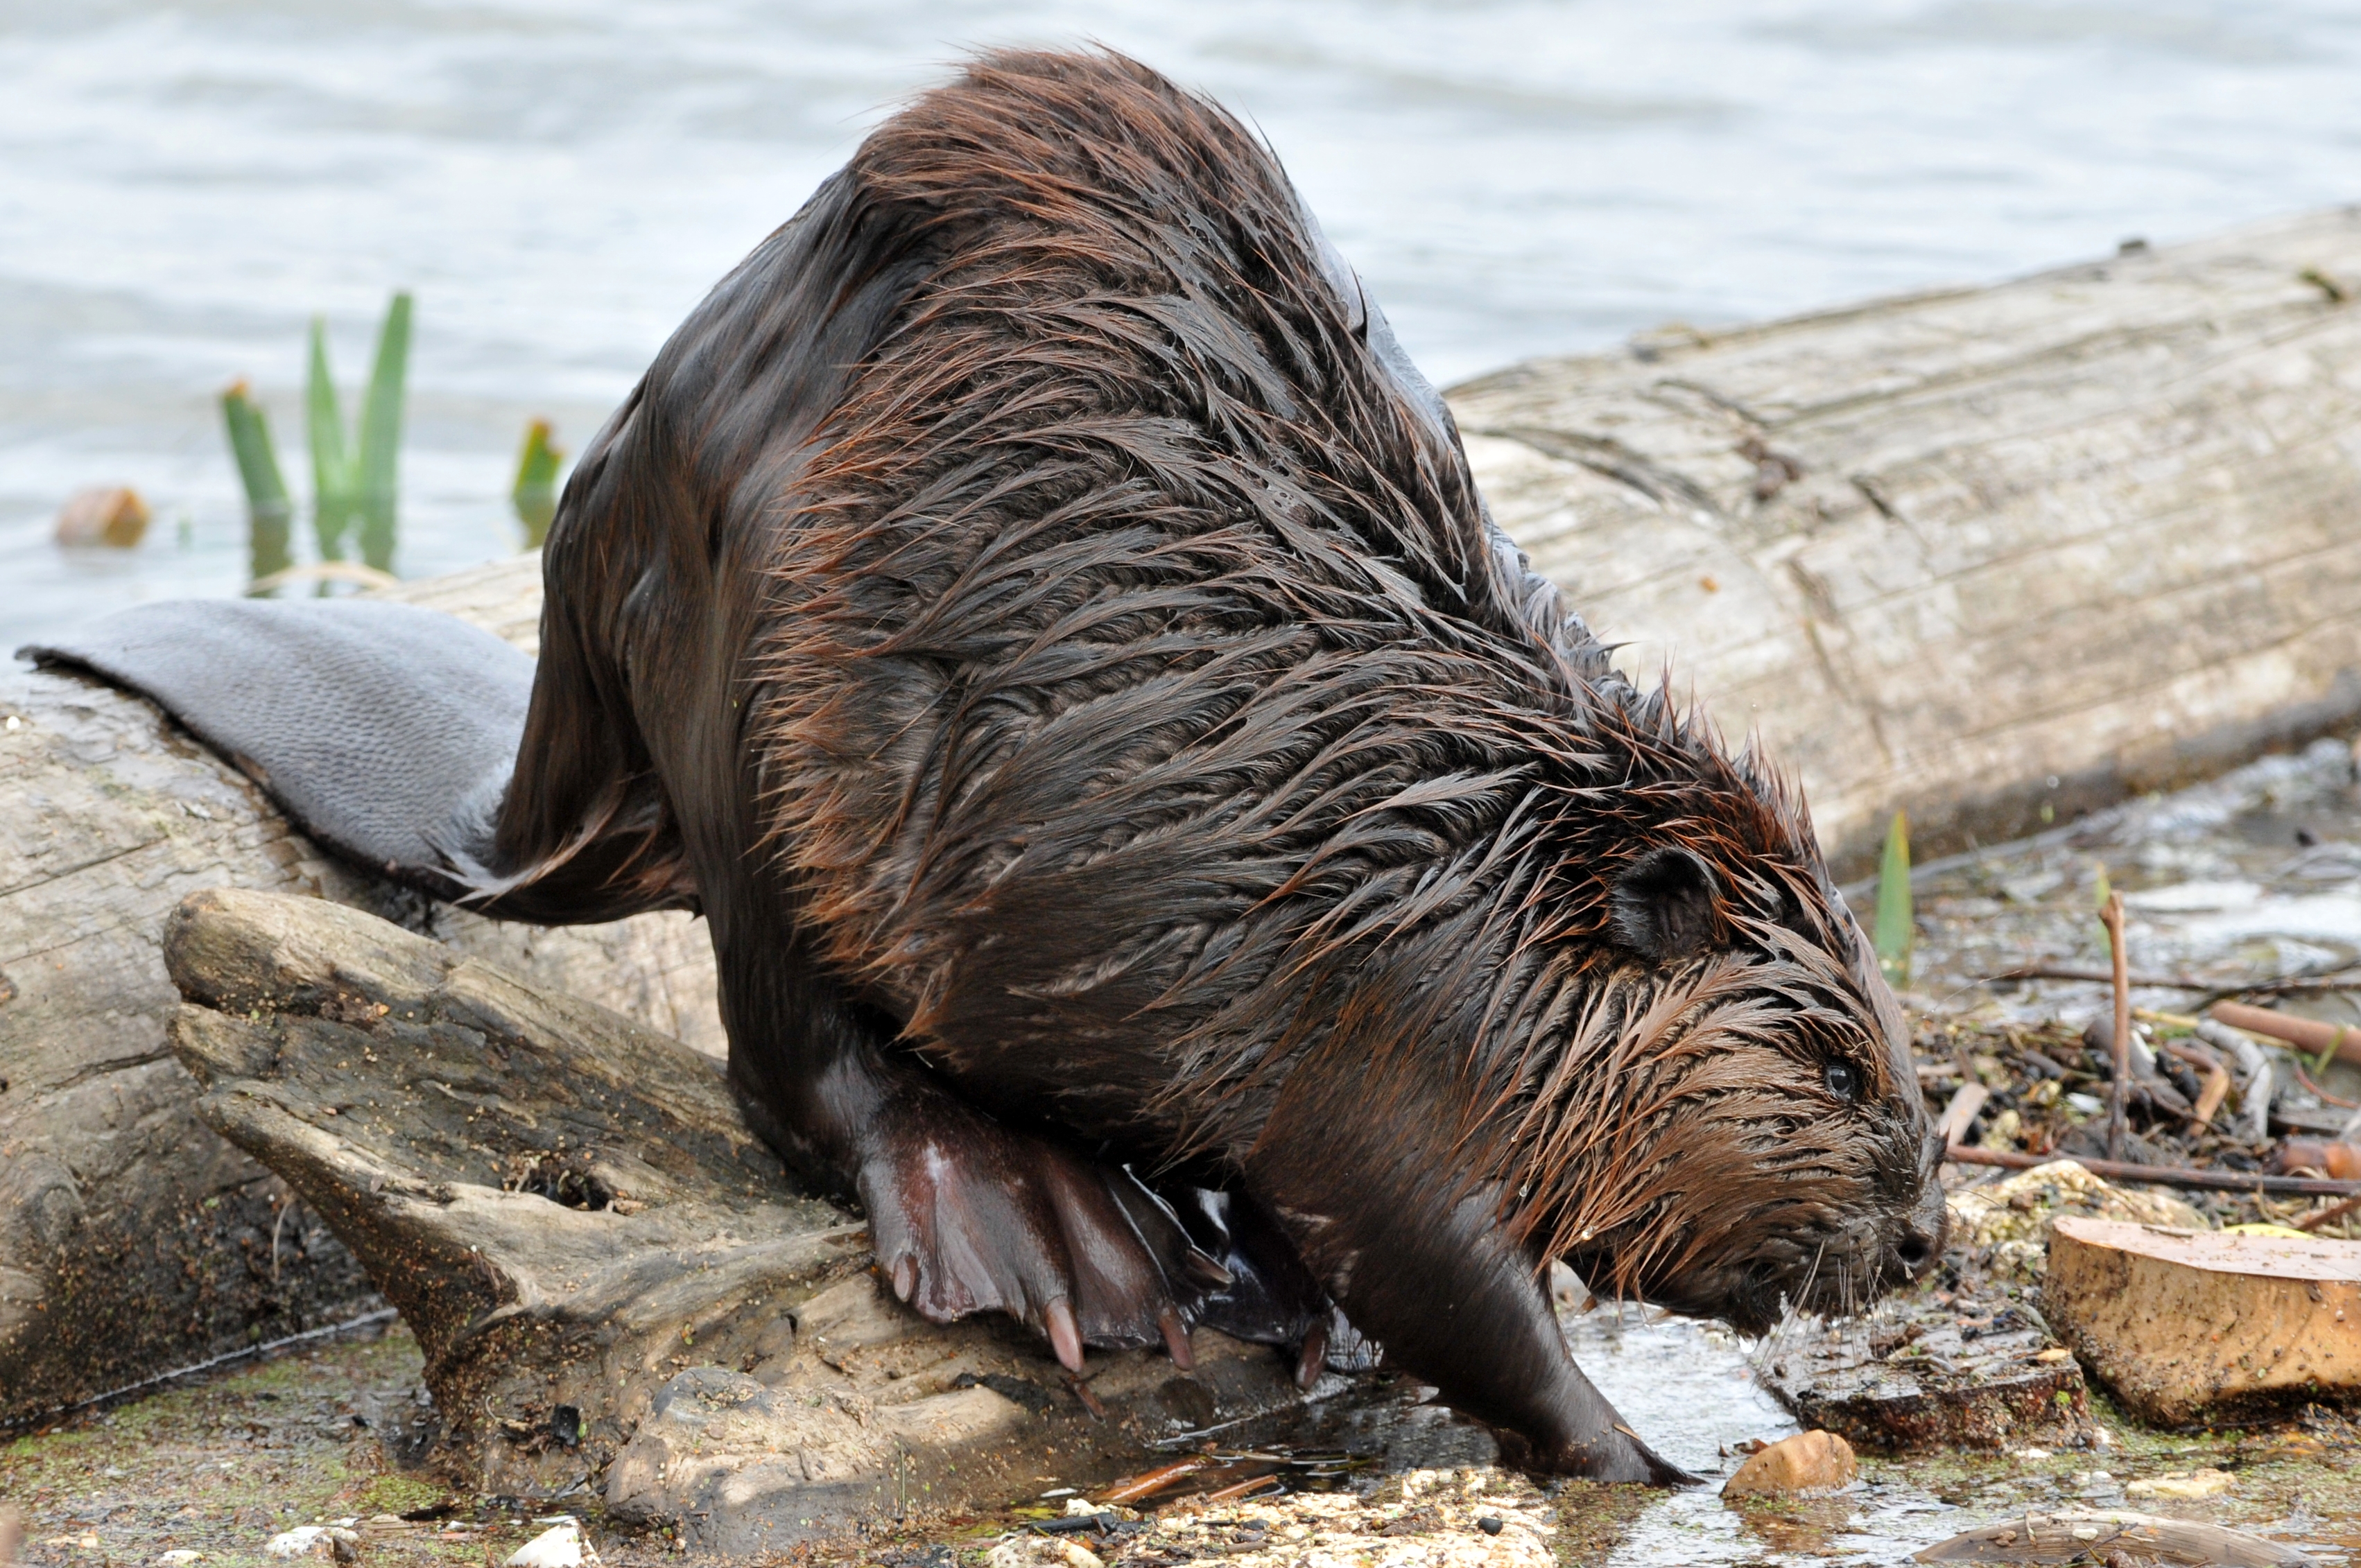 Beavers Are Keystone Species in USA